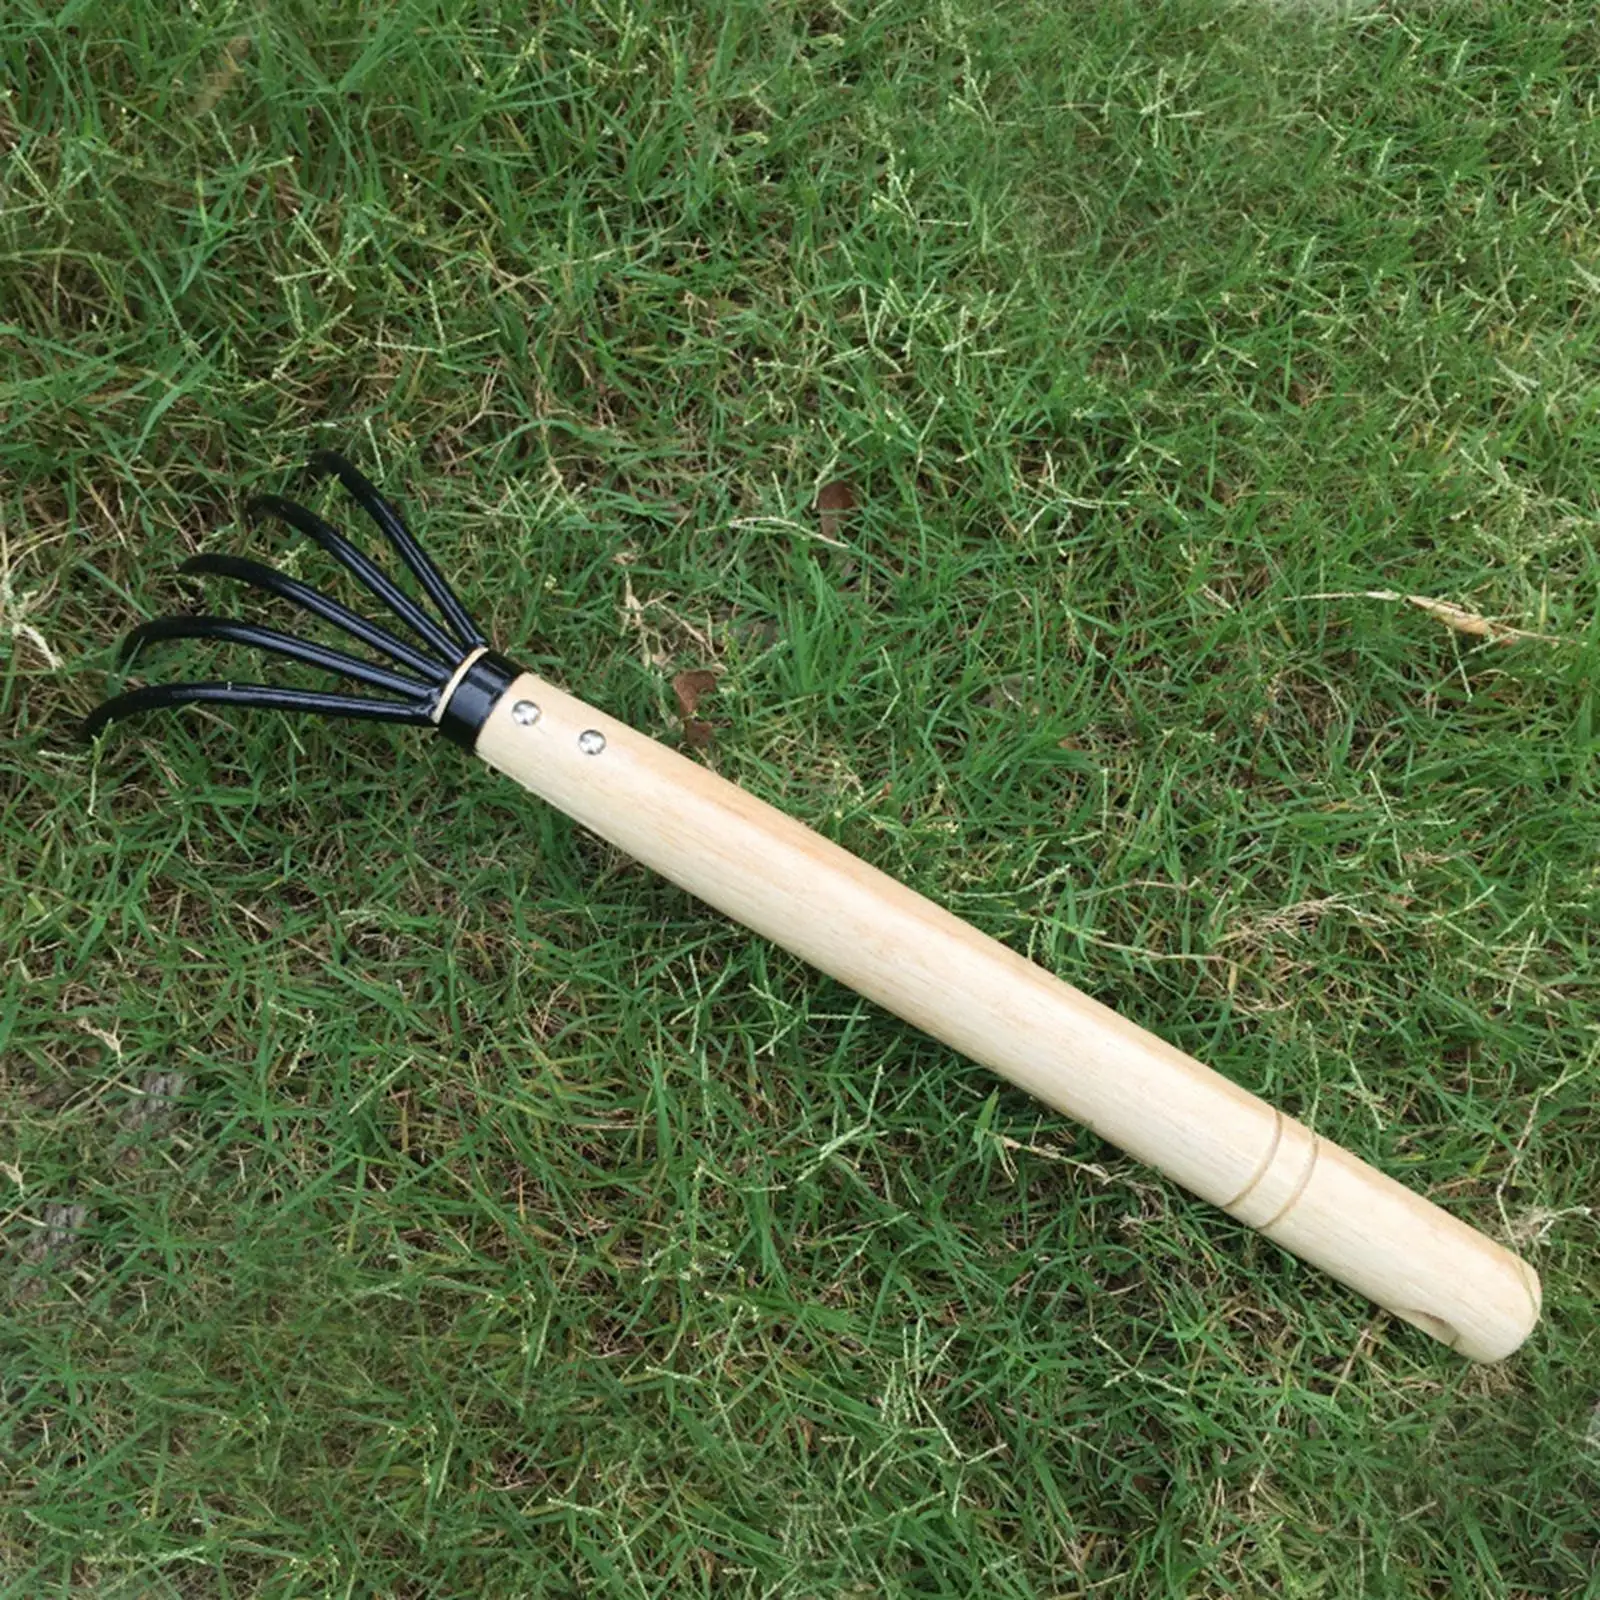 5 Claws Garden Rake Hand Rake Professional Garden Gardening Tools Handheld Wooden Handle Mutipurpose for Loose Soil Digging Farm